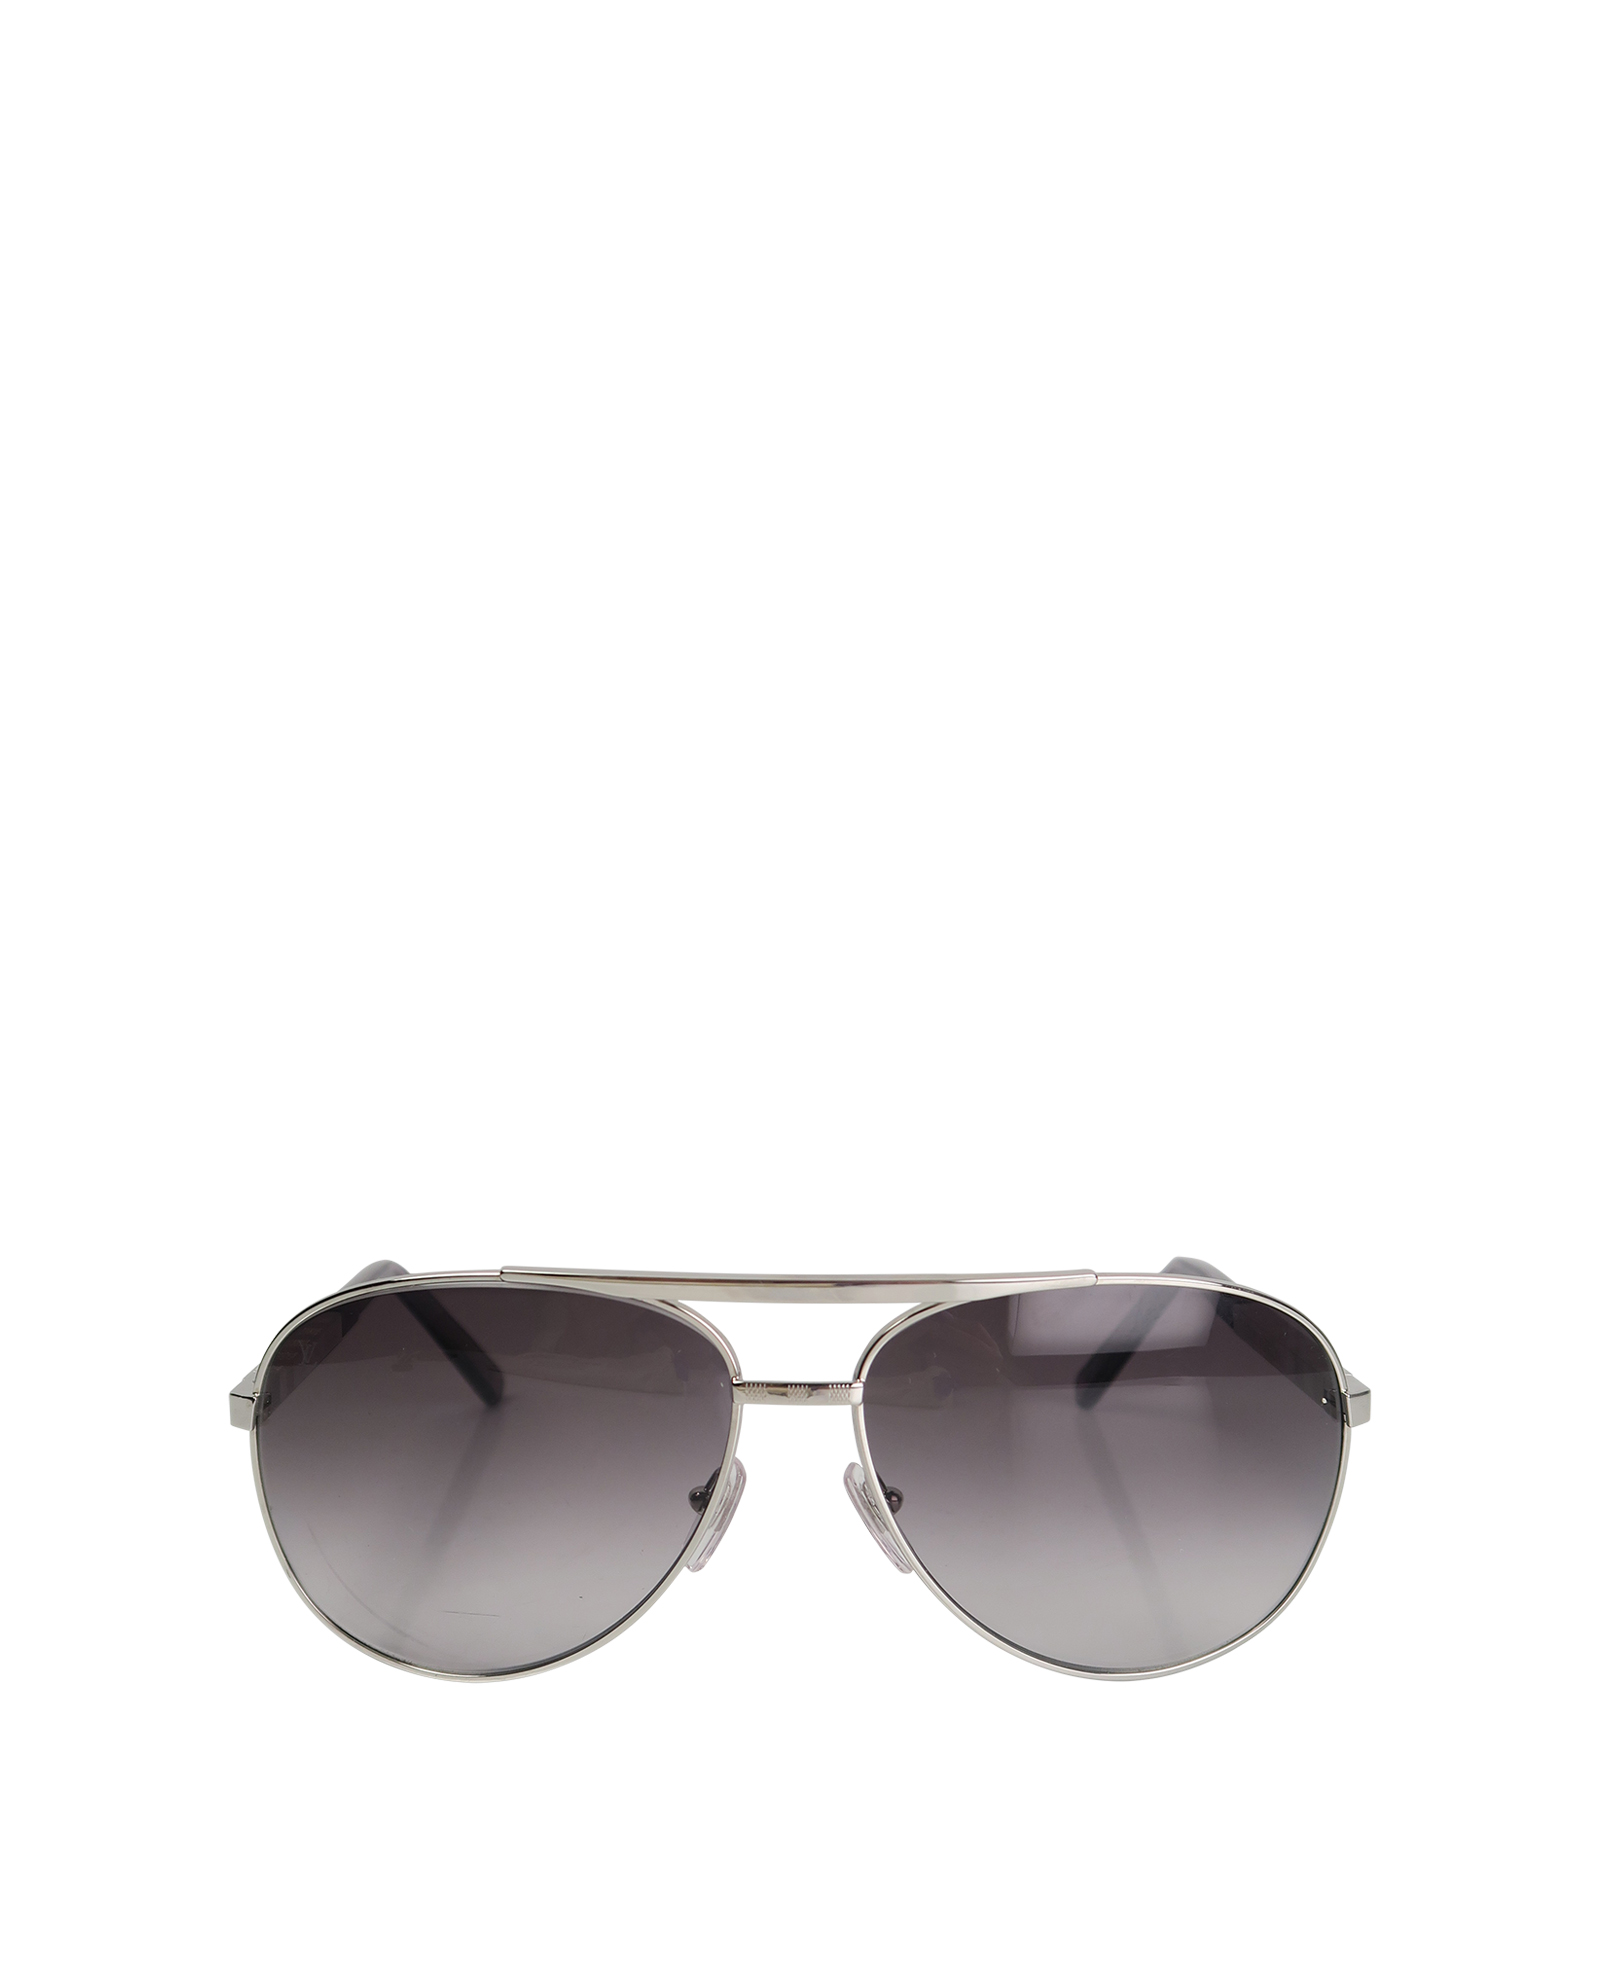 Louis Vuitton Attitude Pilote Aviator Sunglasses, Louis Vuitton Sunglasses